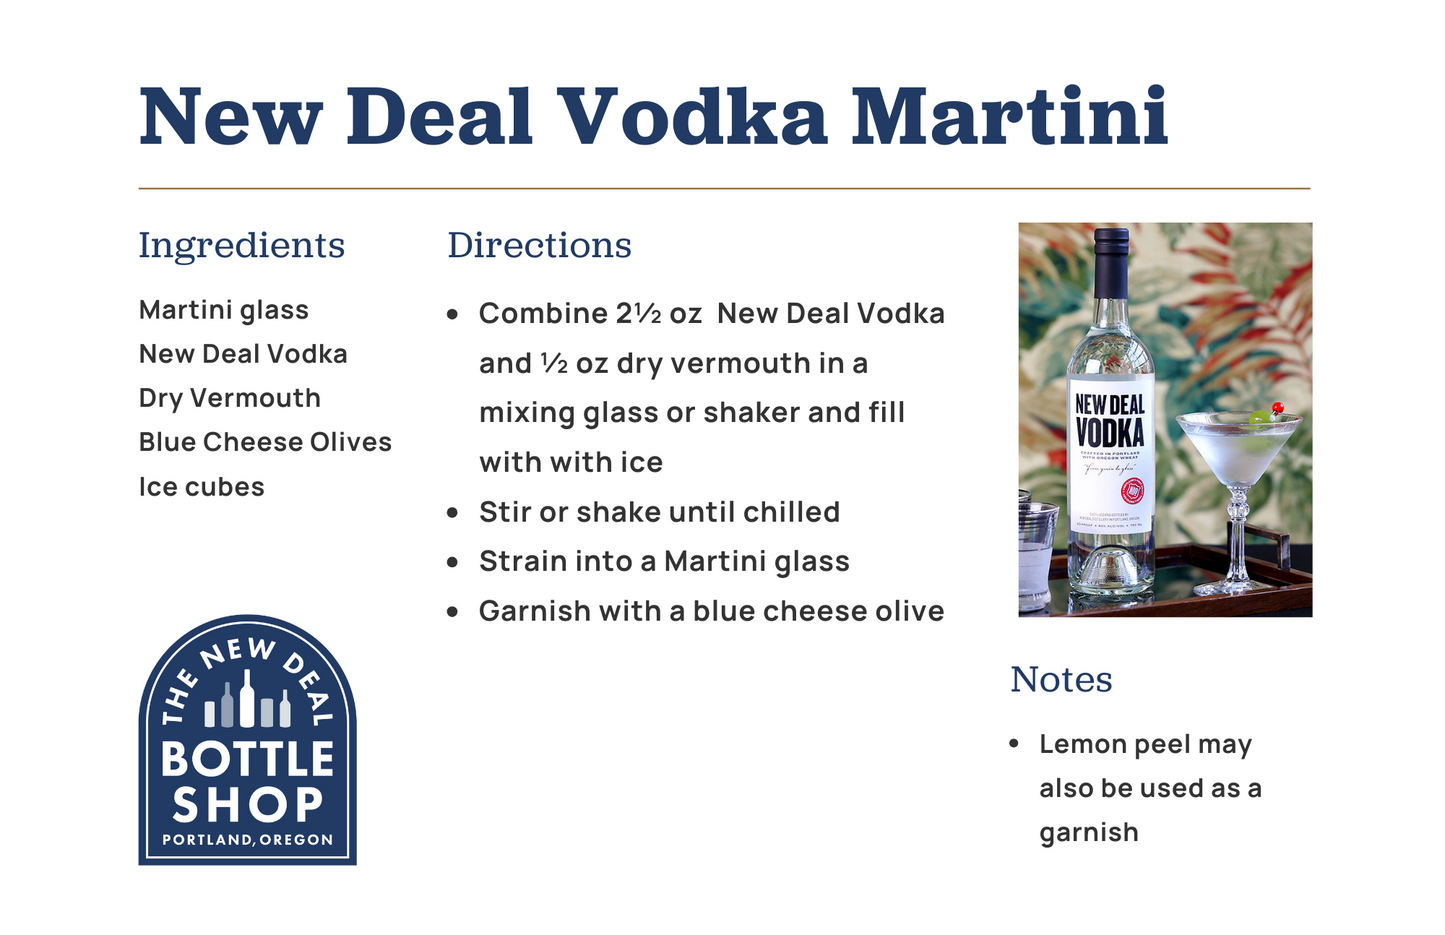 Vodka Martini Cocktail Kit